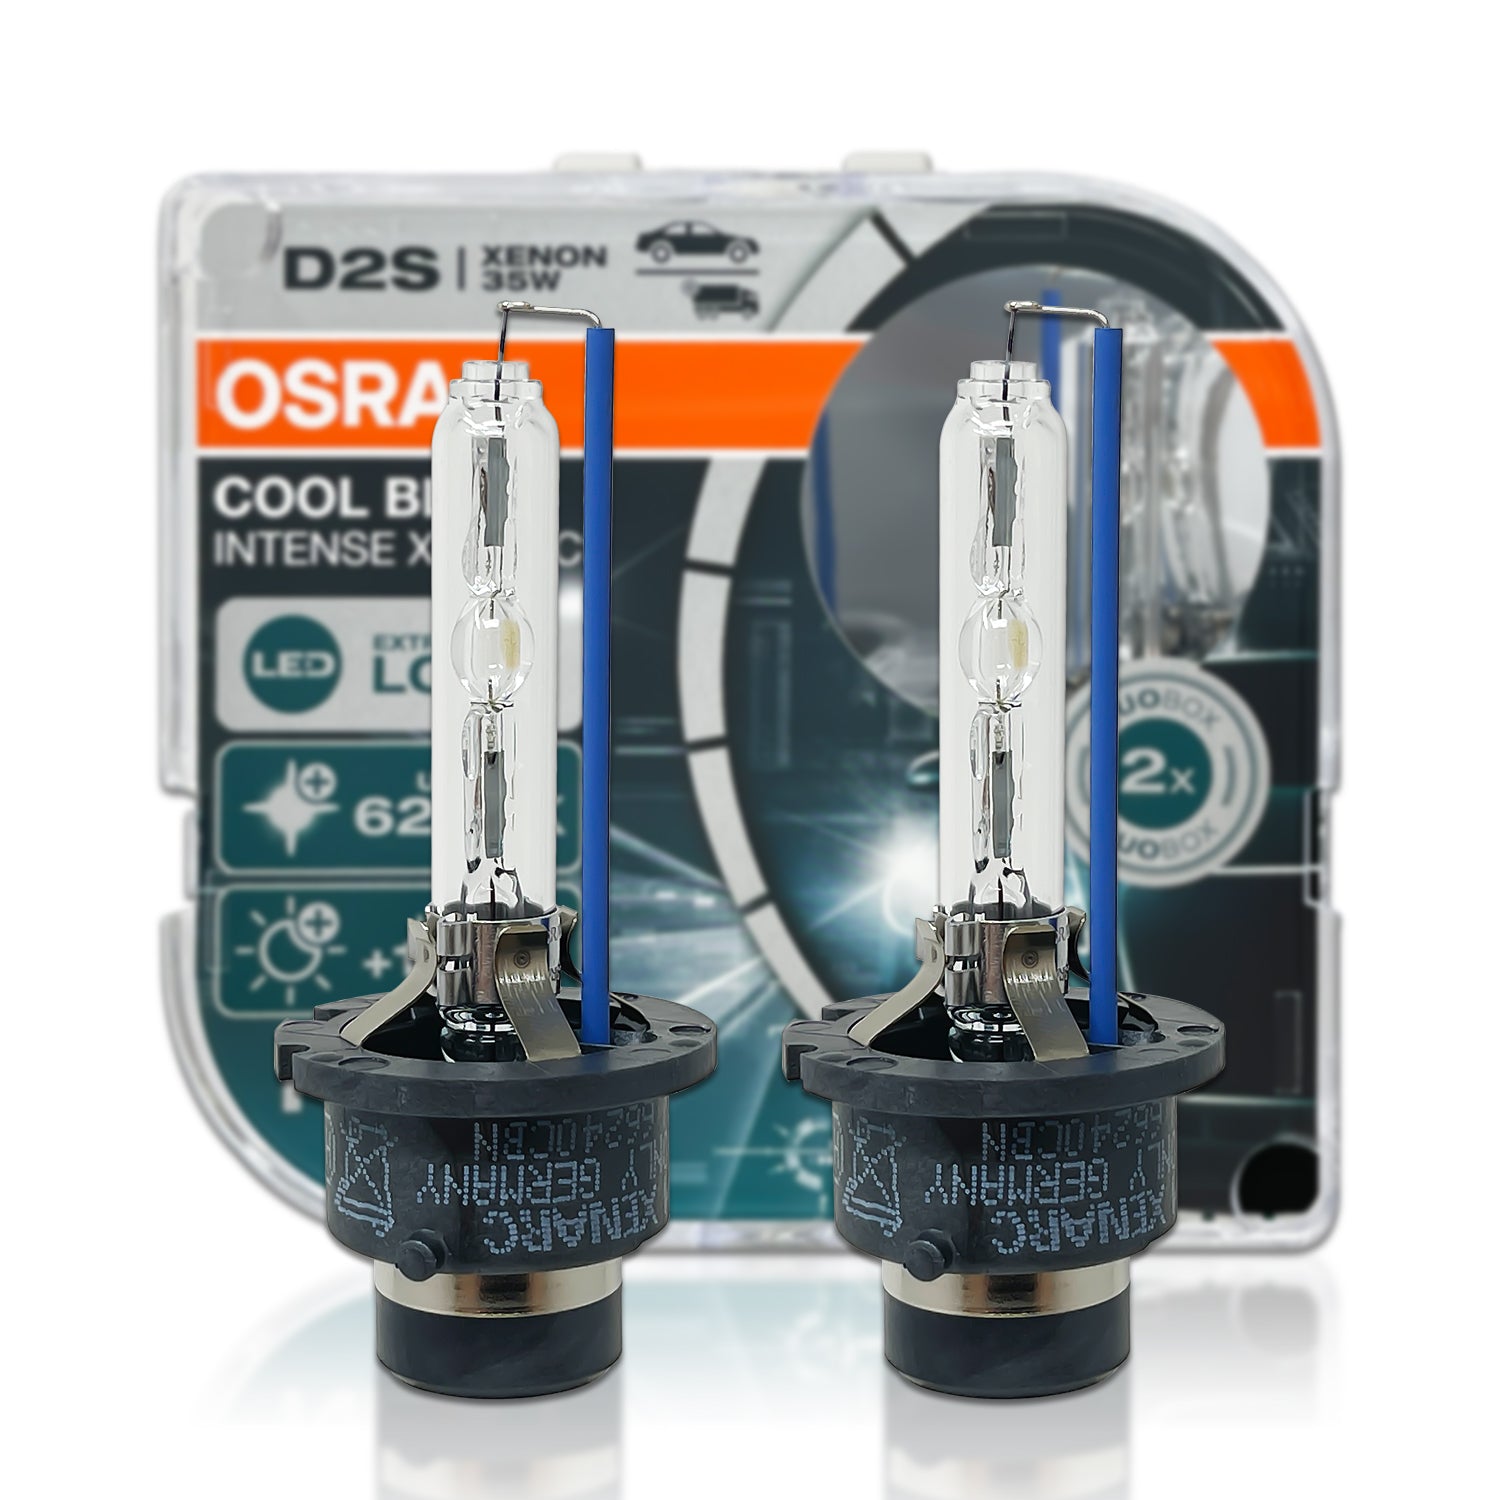 Osram D1S 35W 4300k ULTRA LIFE xenon lampor 1-pack PK32d-2